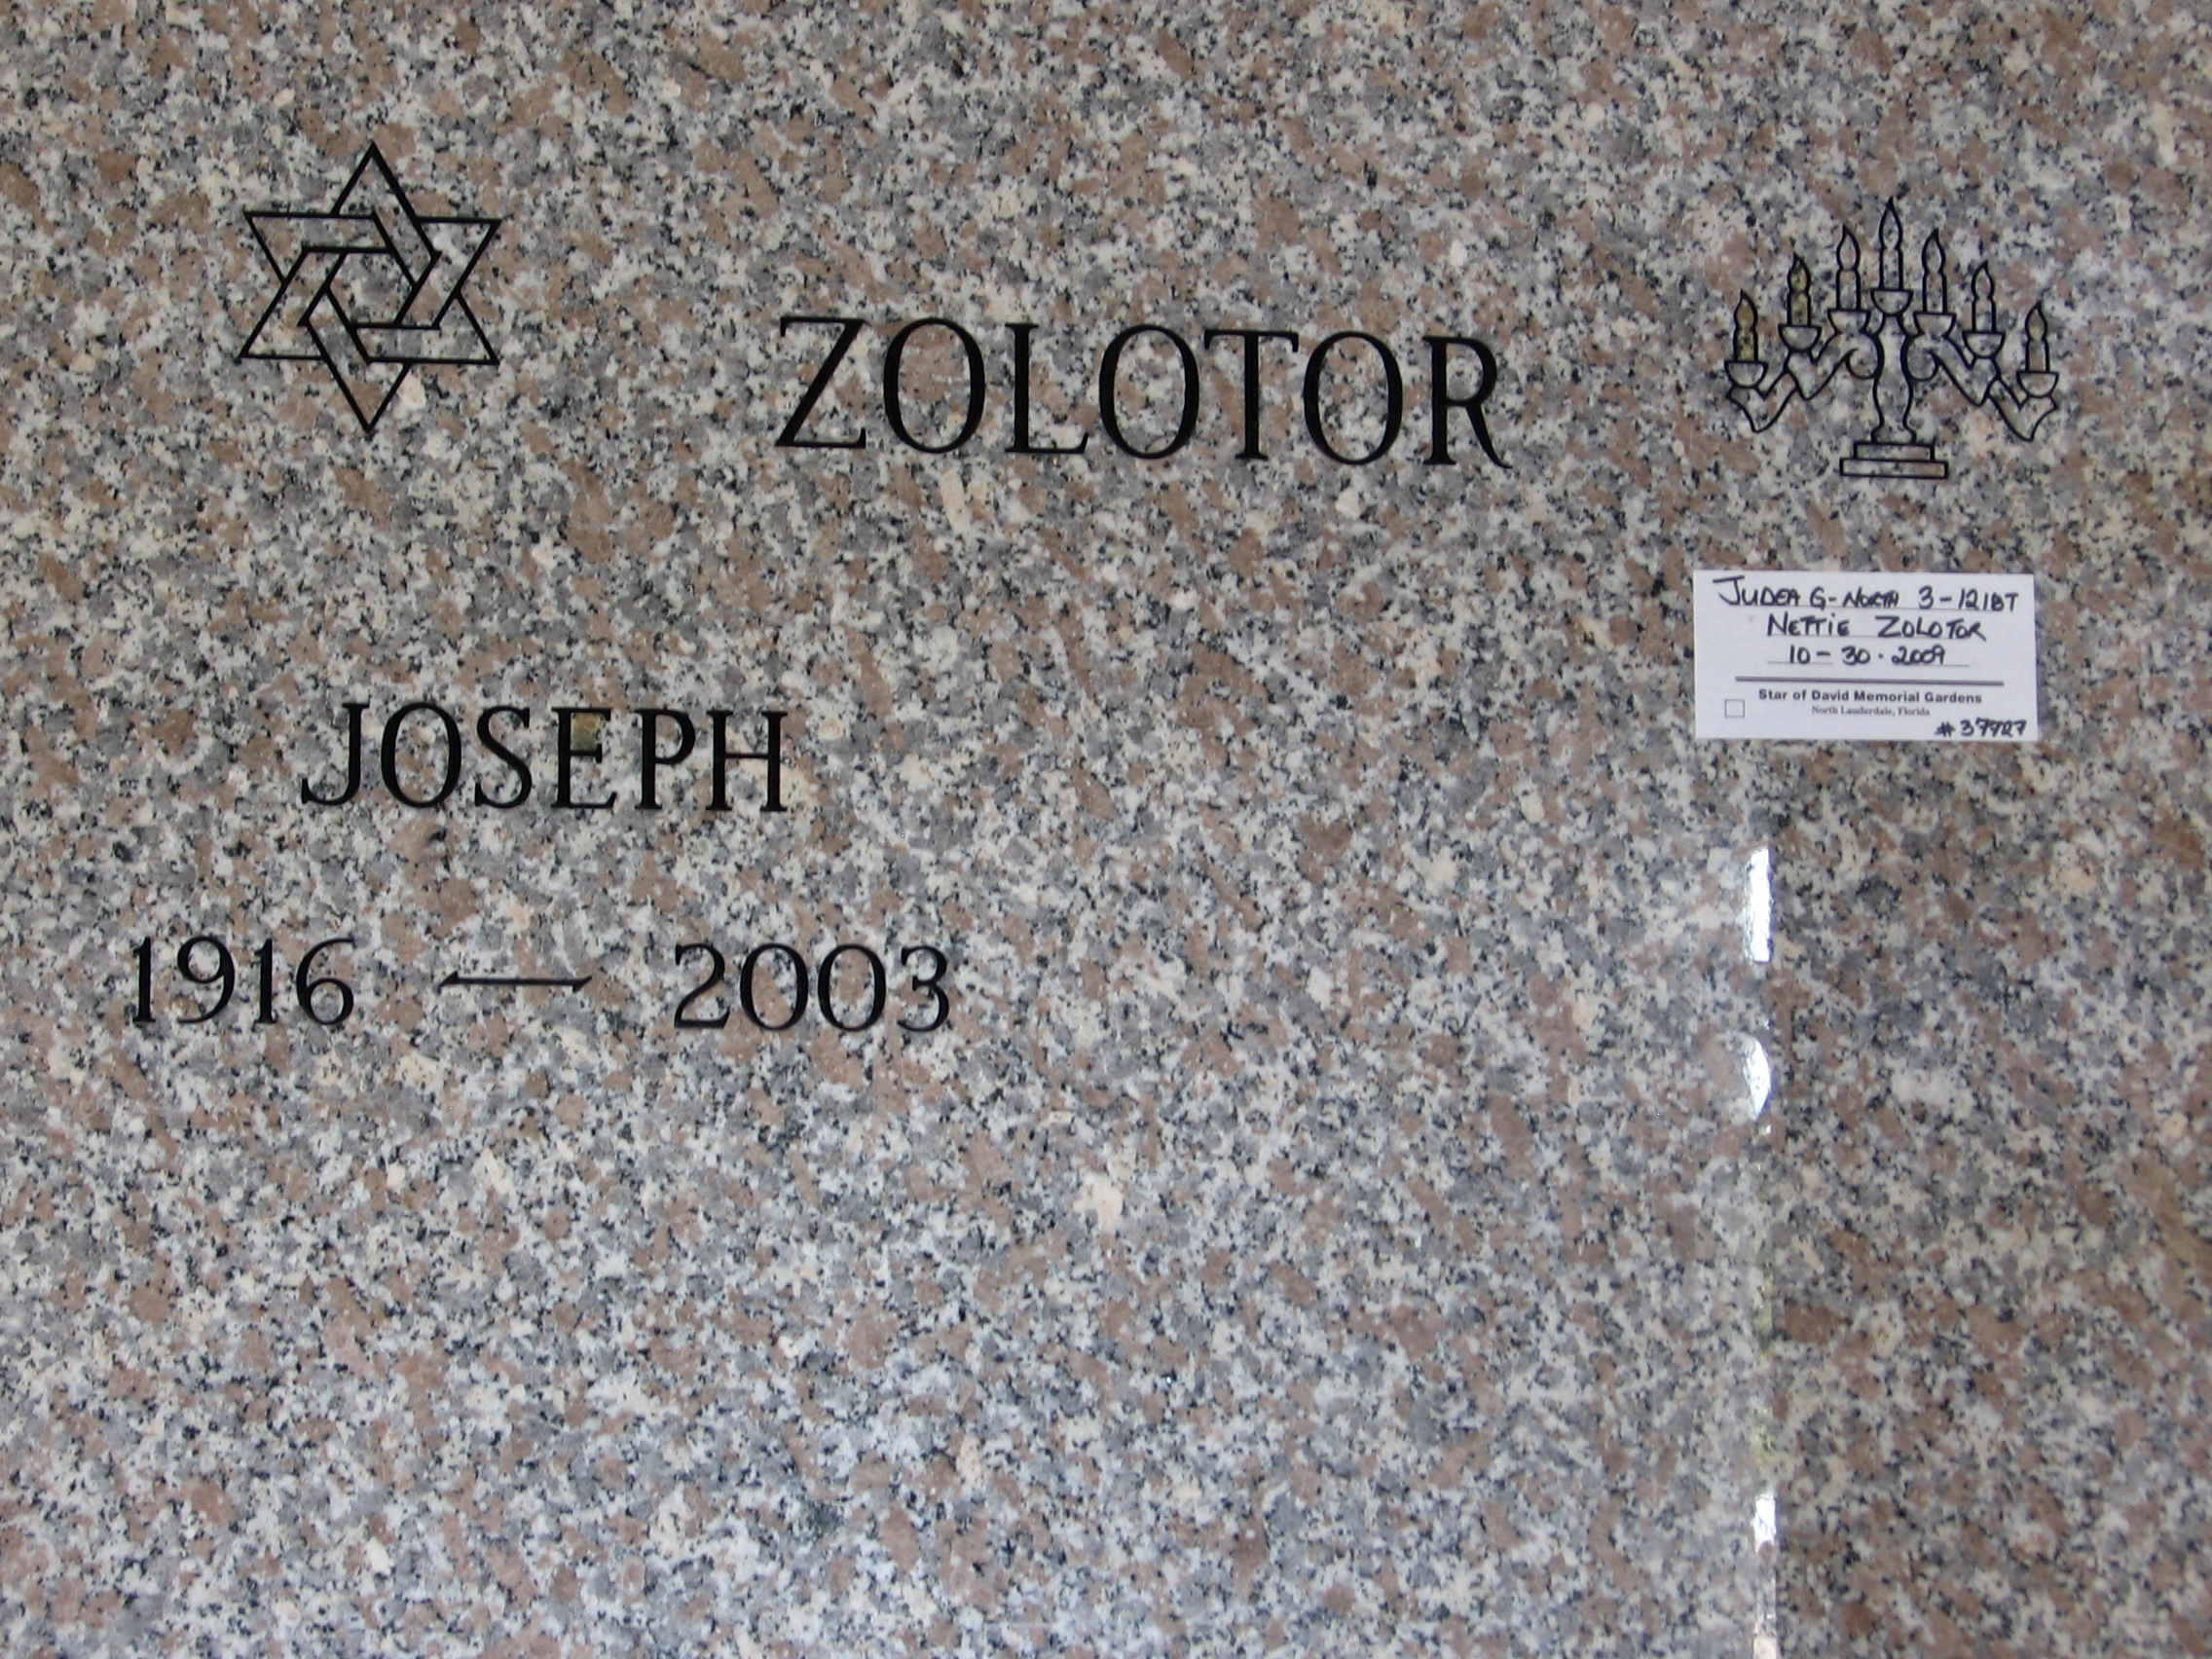 Joseph Zolotor